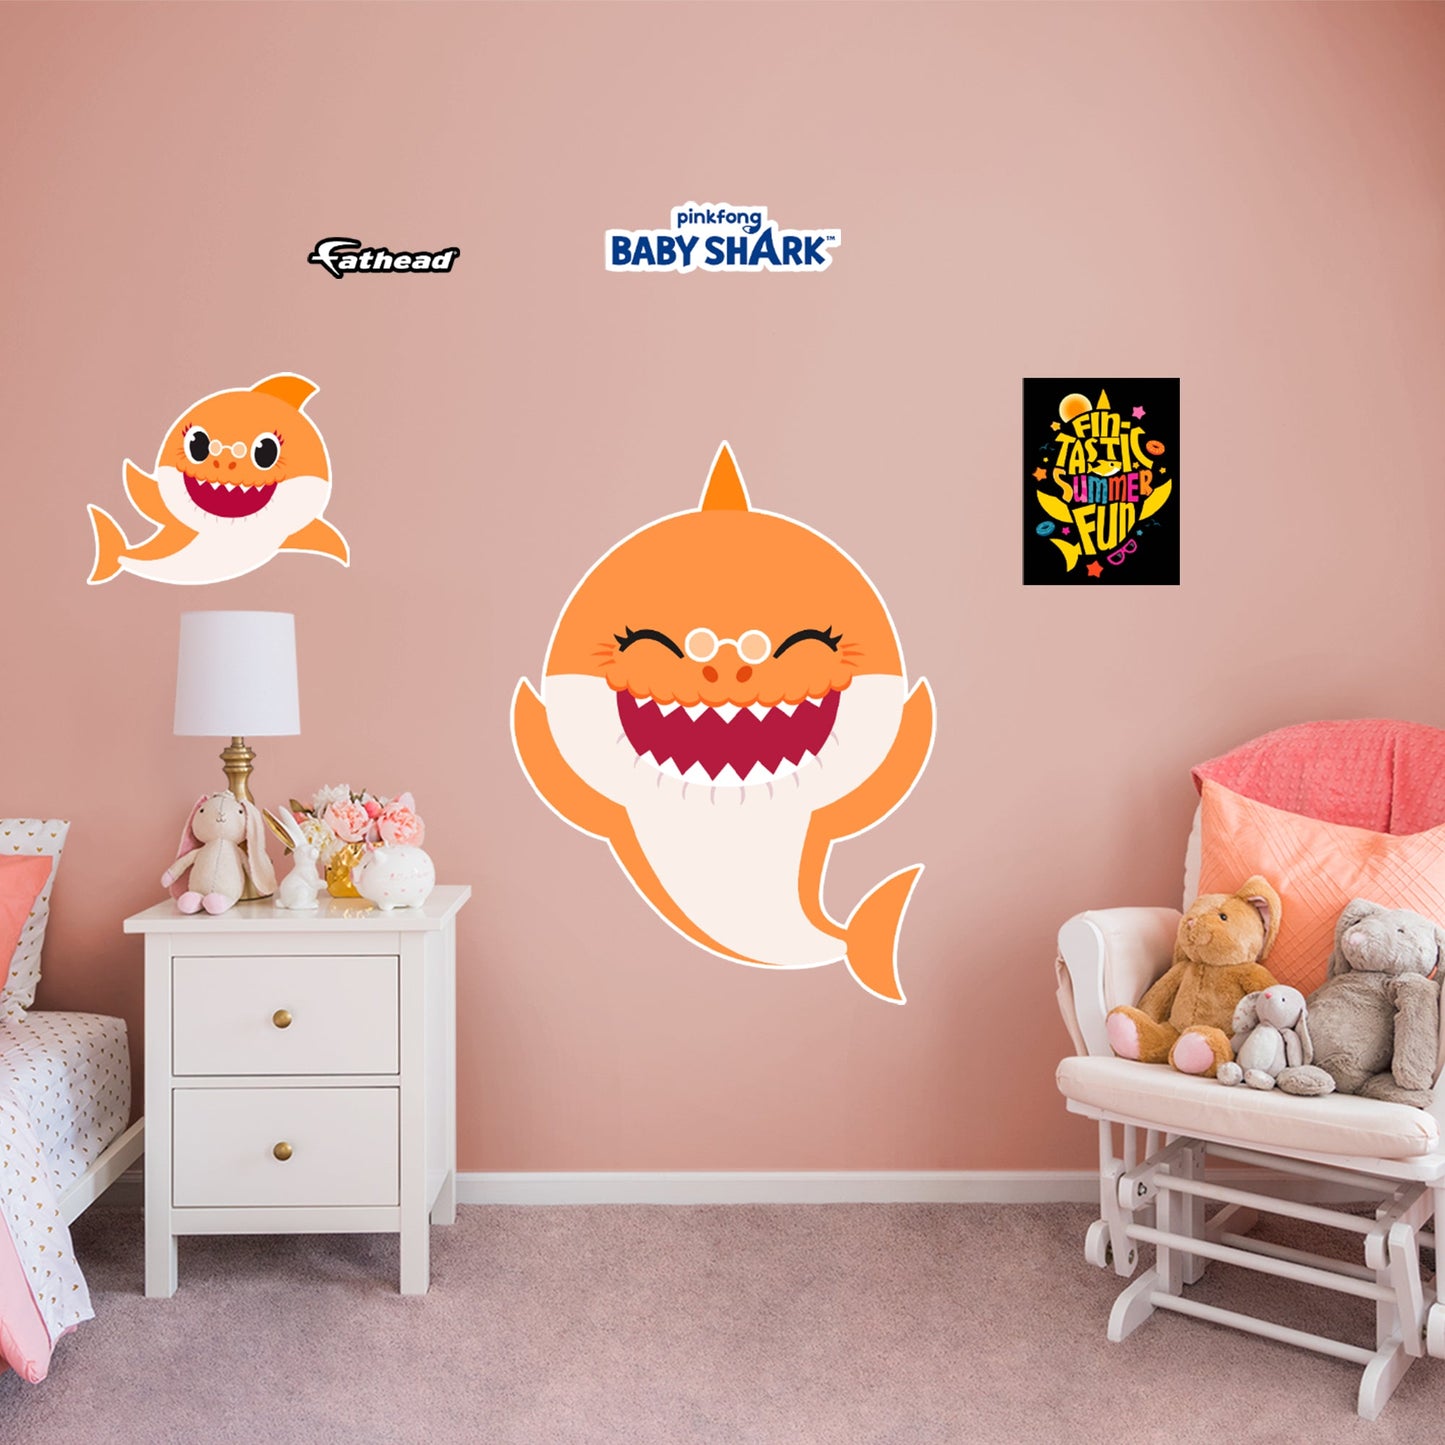 Baby Shark: Grandma Shark RealBig - Officially Licensed Nickelodeon Removable Adhesive Decal